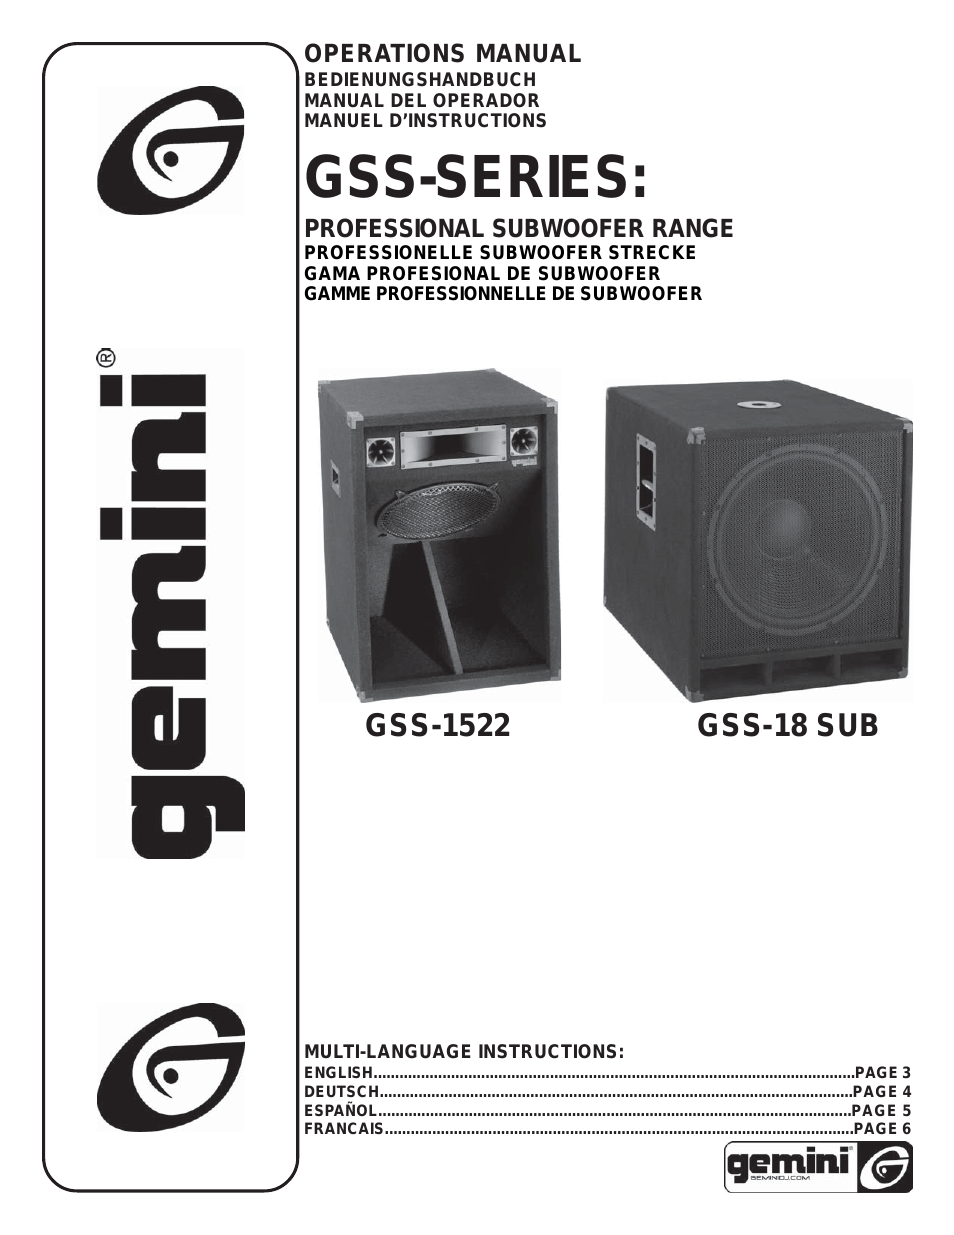 GSS-1522